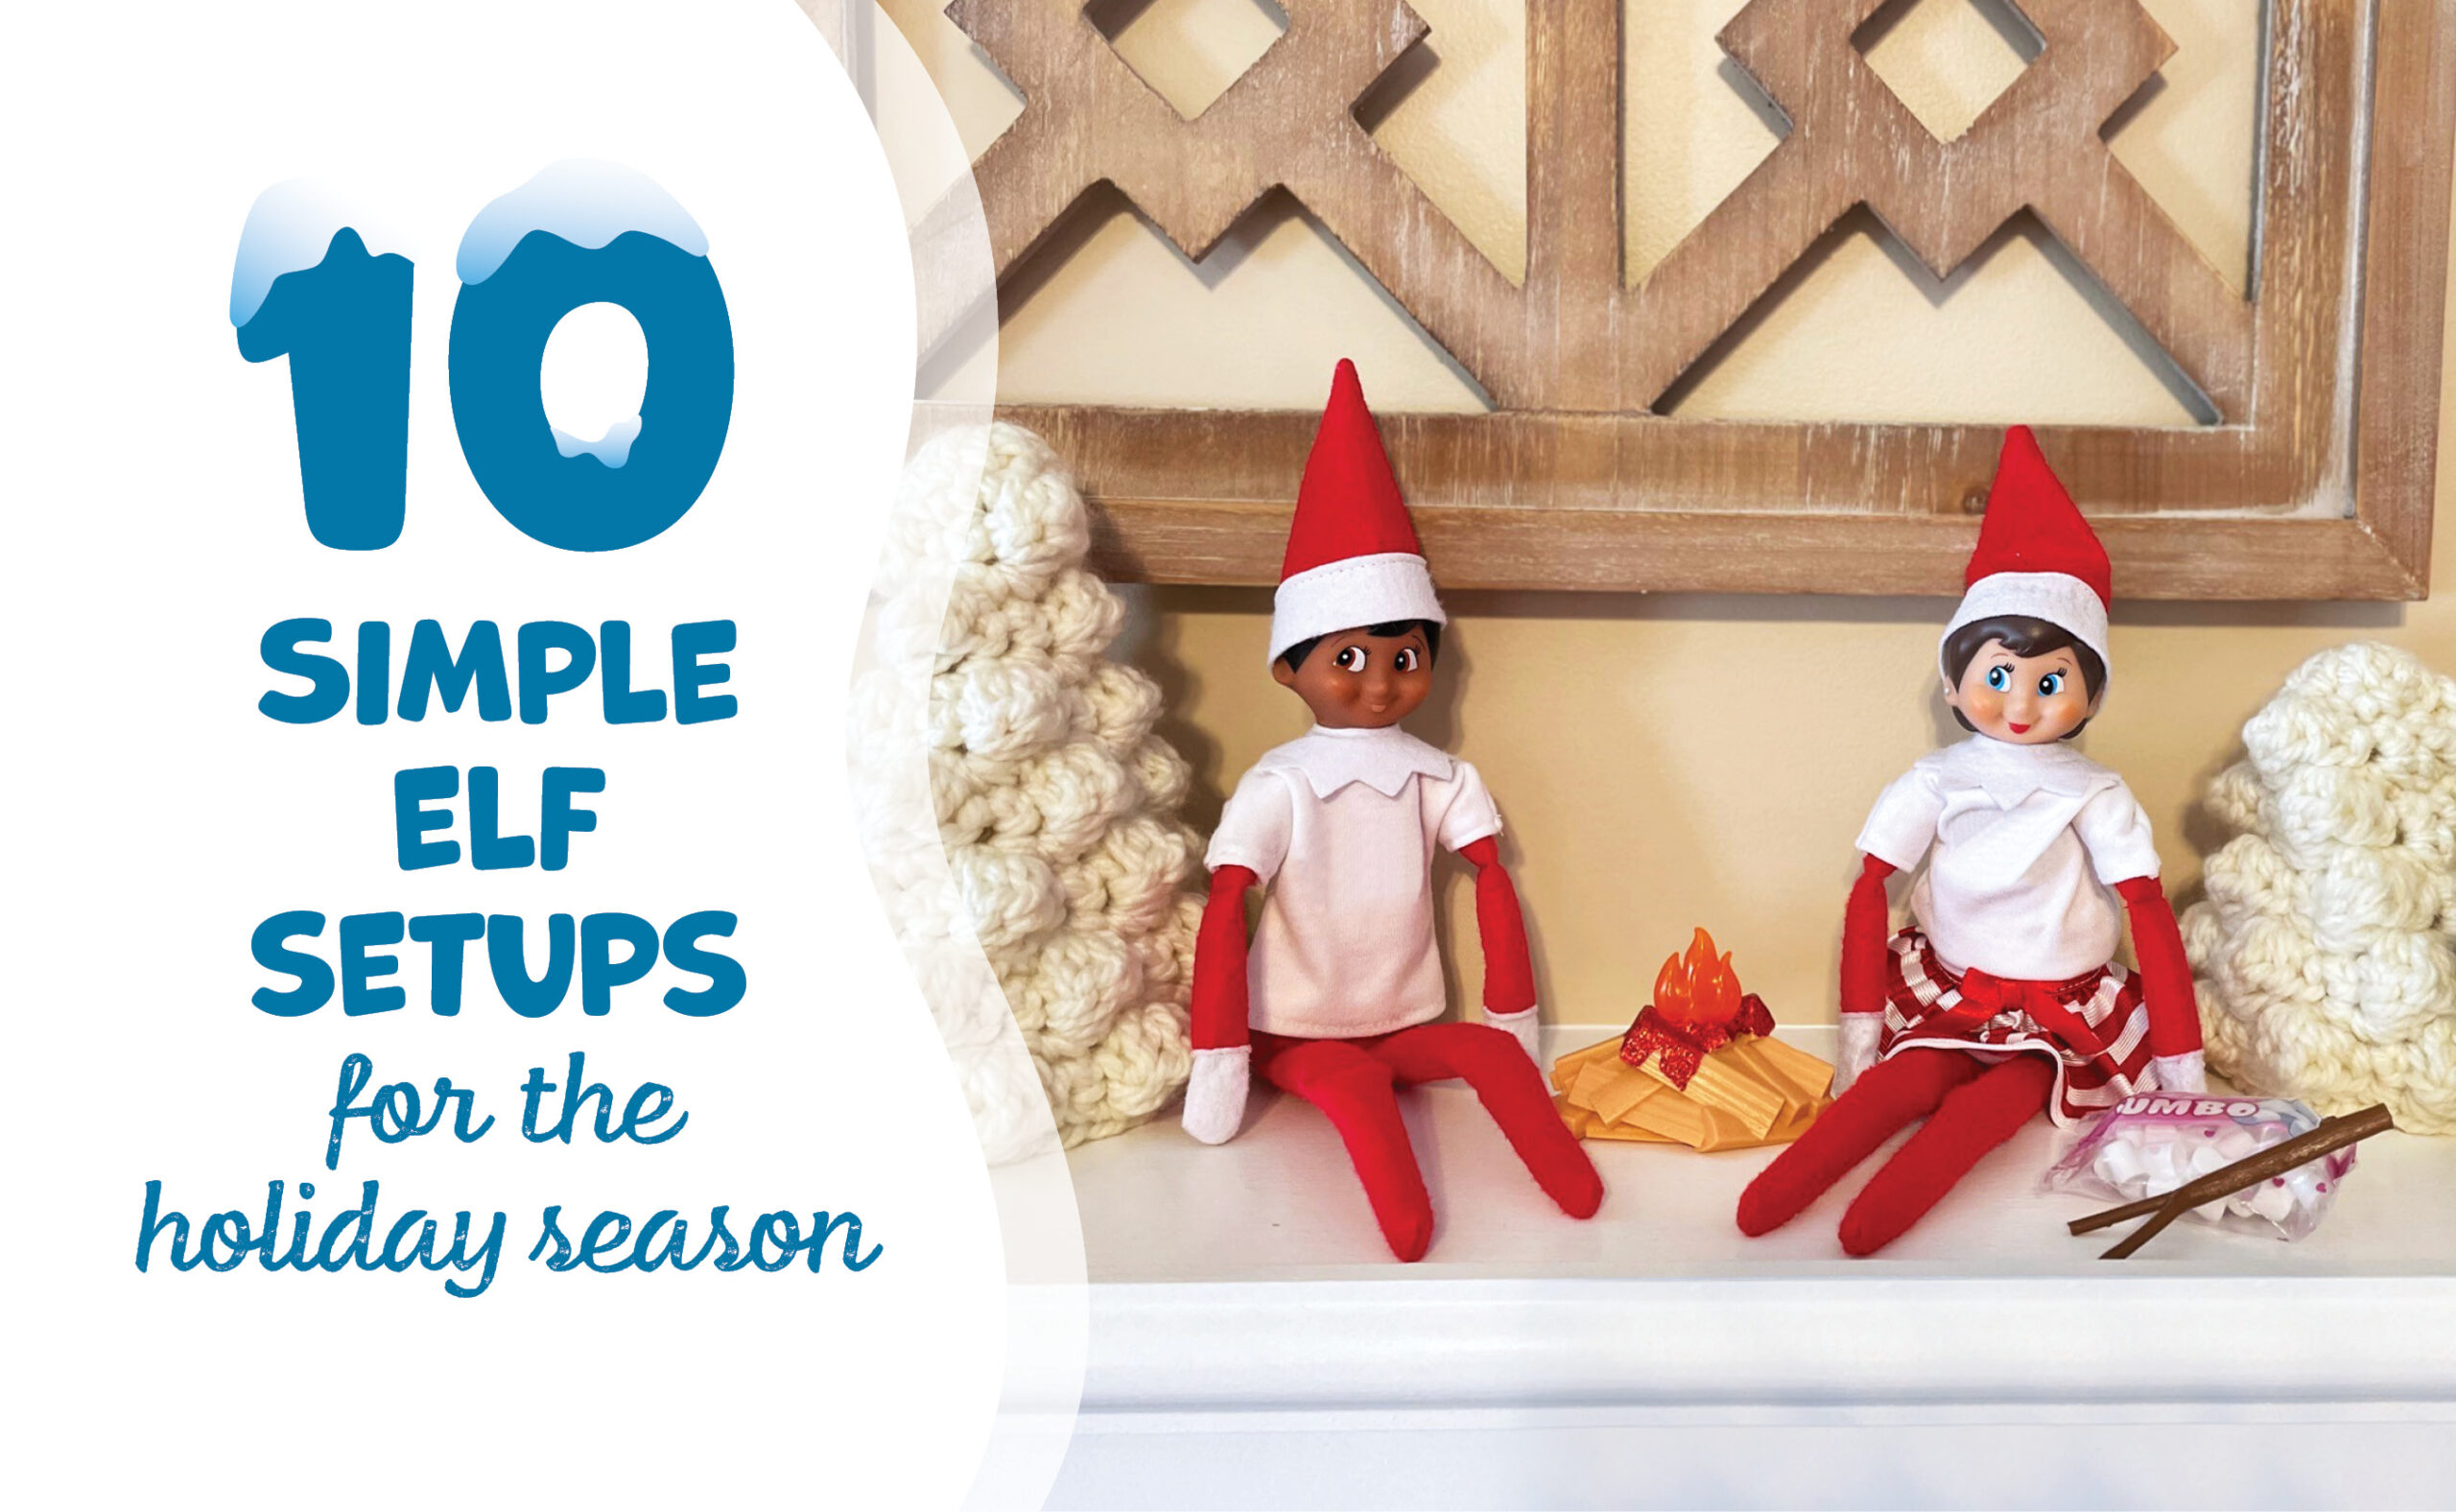 Ten Simple Elf Setups for the Holiday Season | The Daily Dose | CDPHP Blog